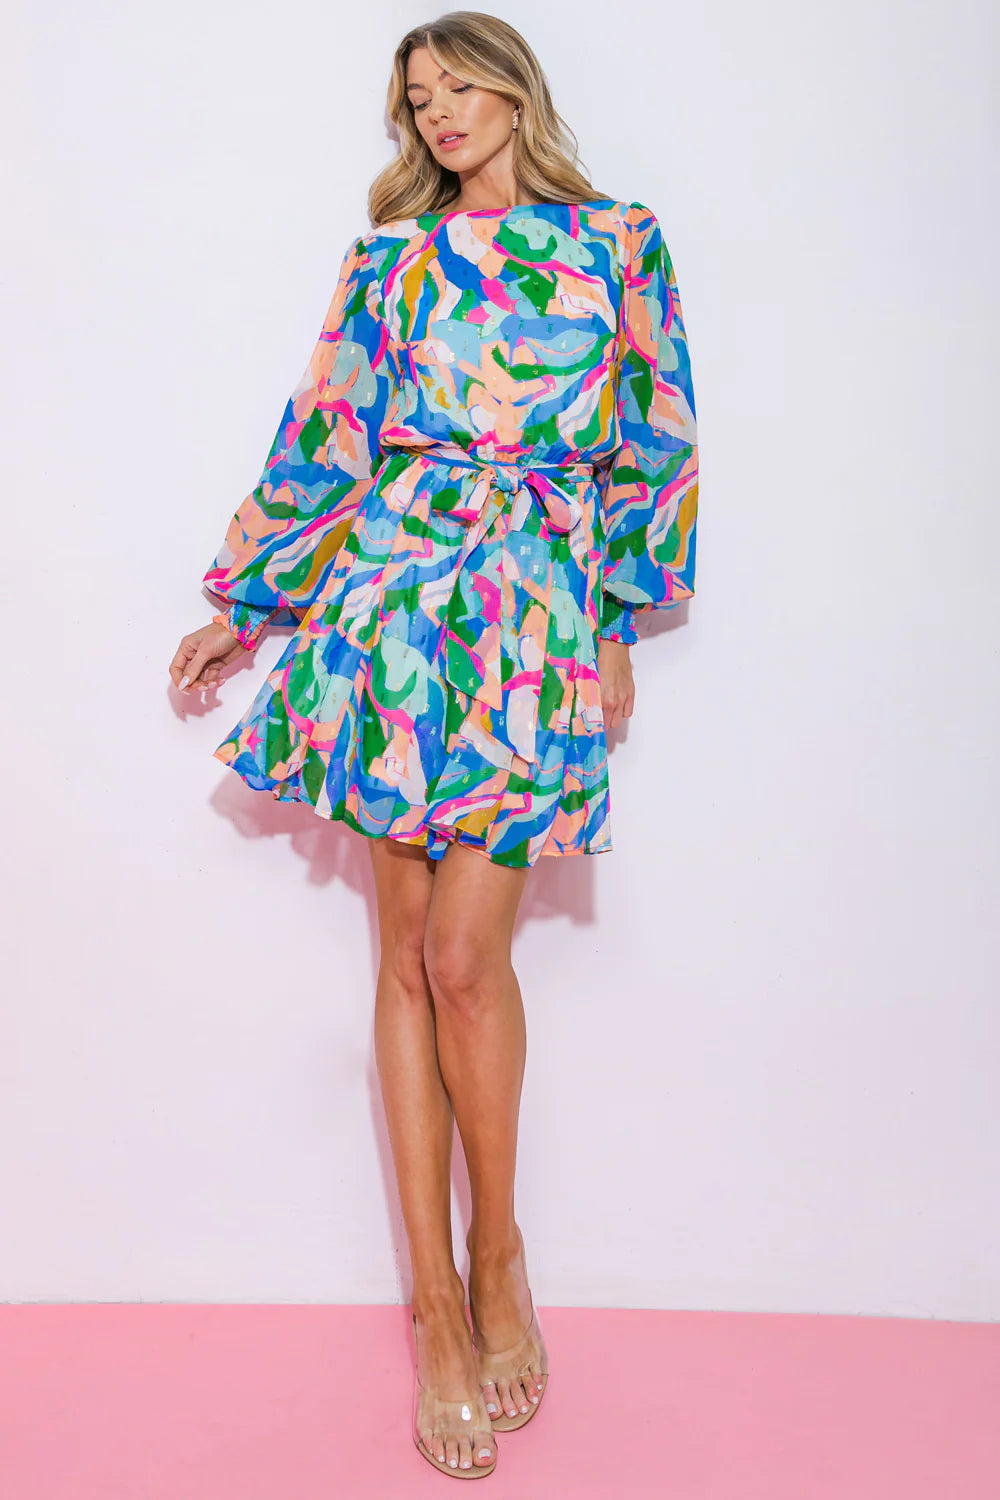 Gidget Textured Woven Mini Dress